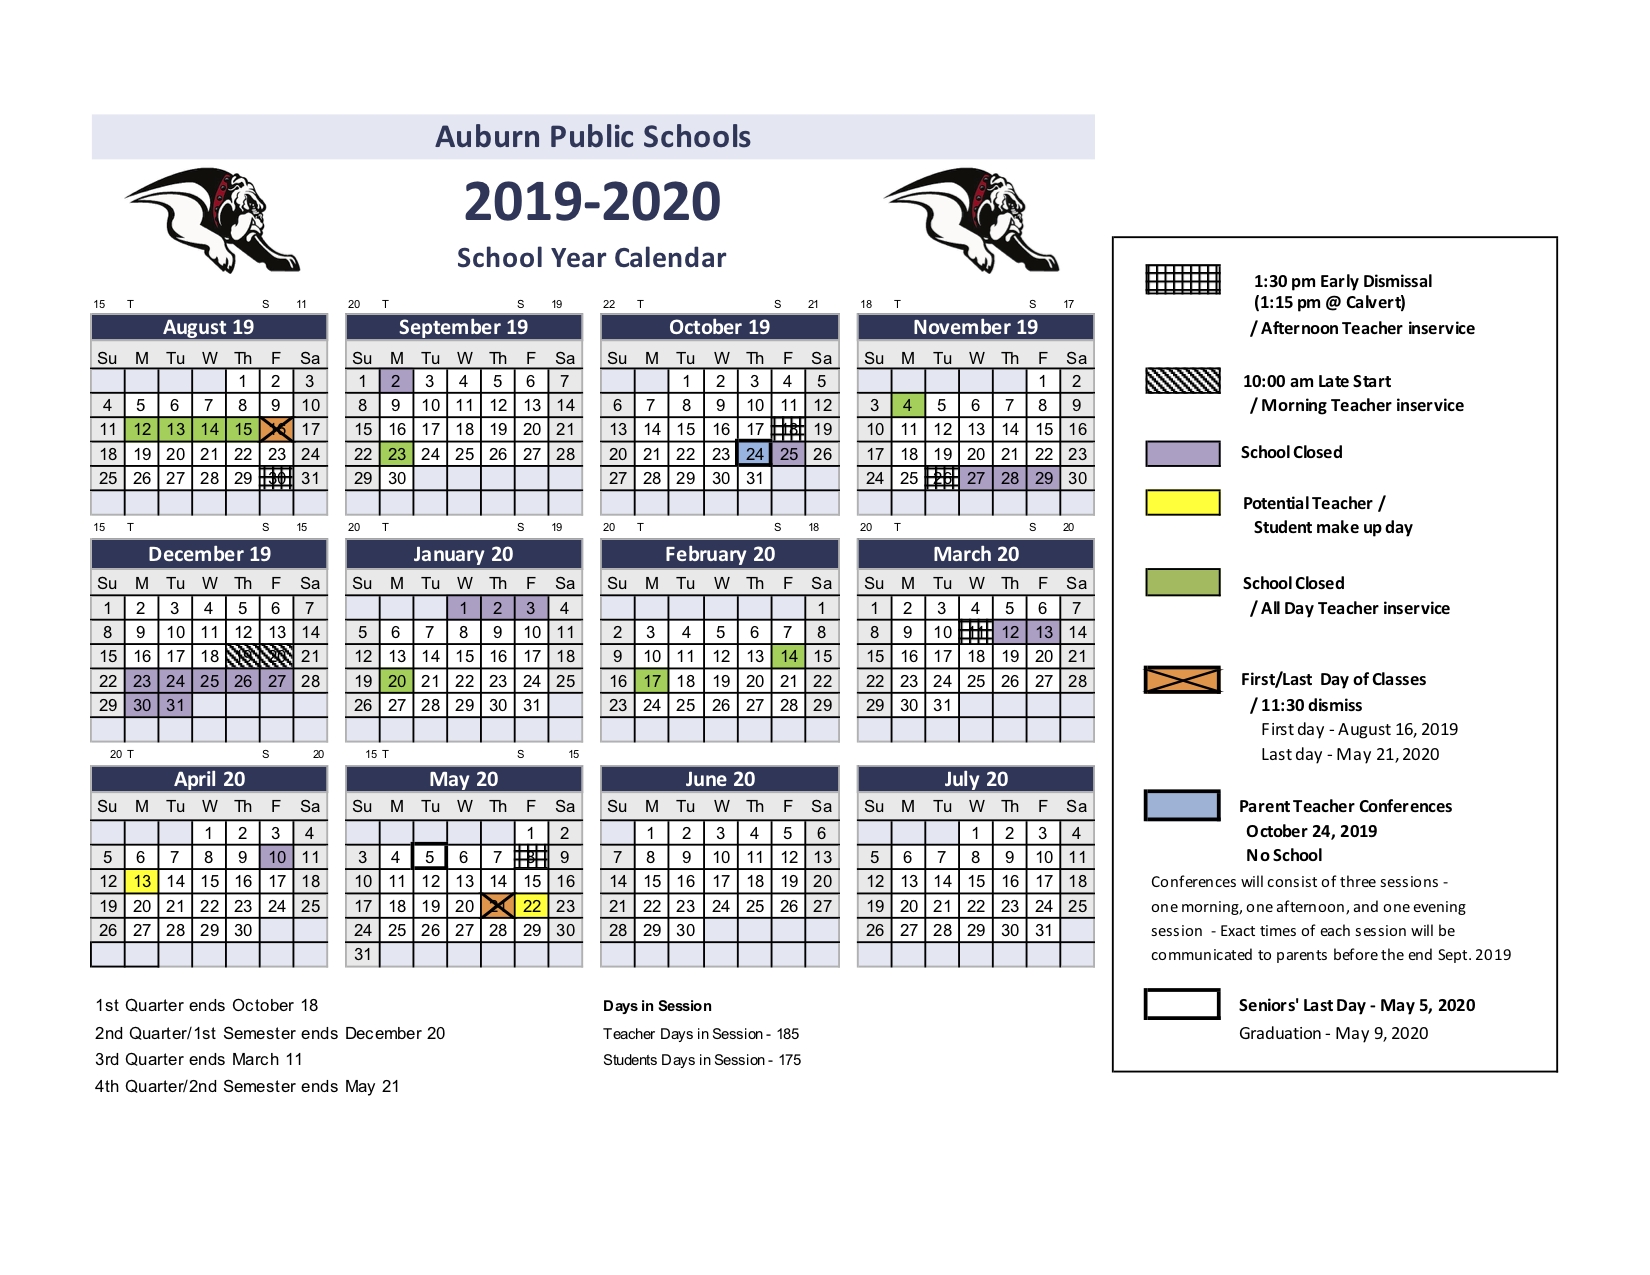 School Calendar | Auburn Public Schools Cusd 4 School Calendar